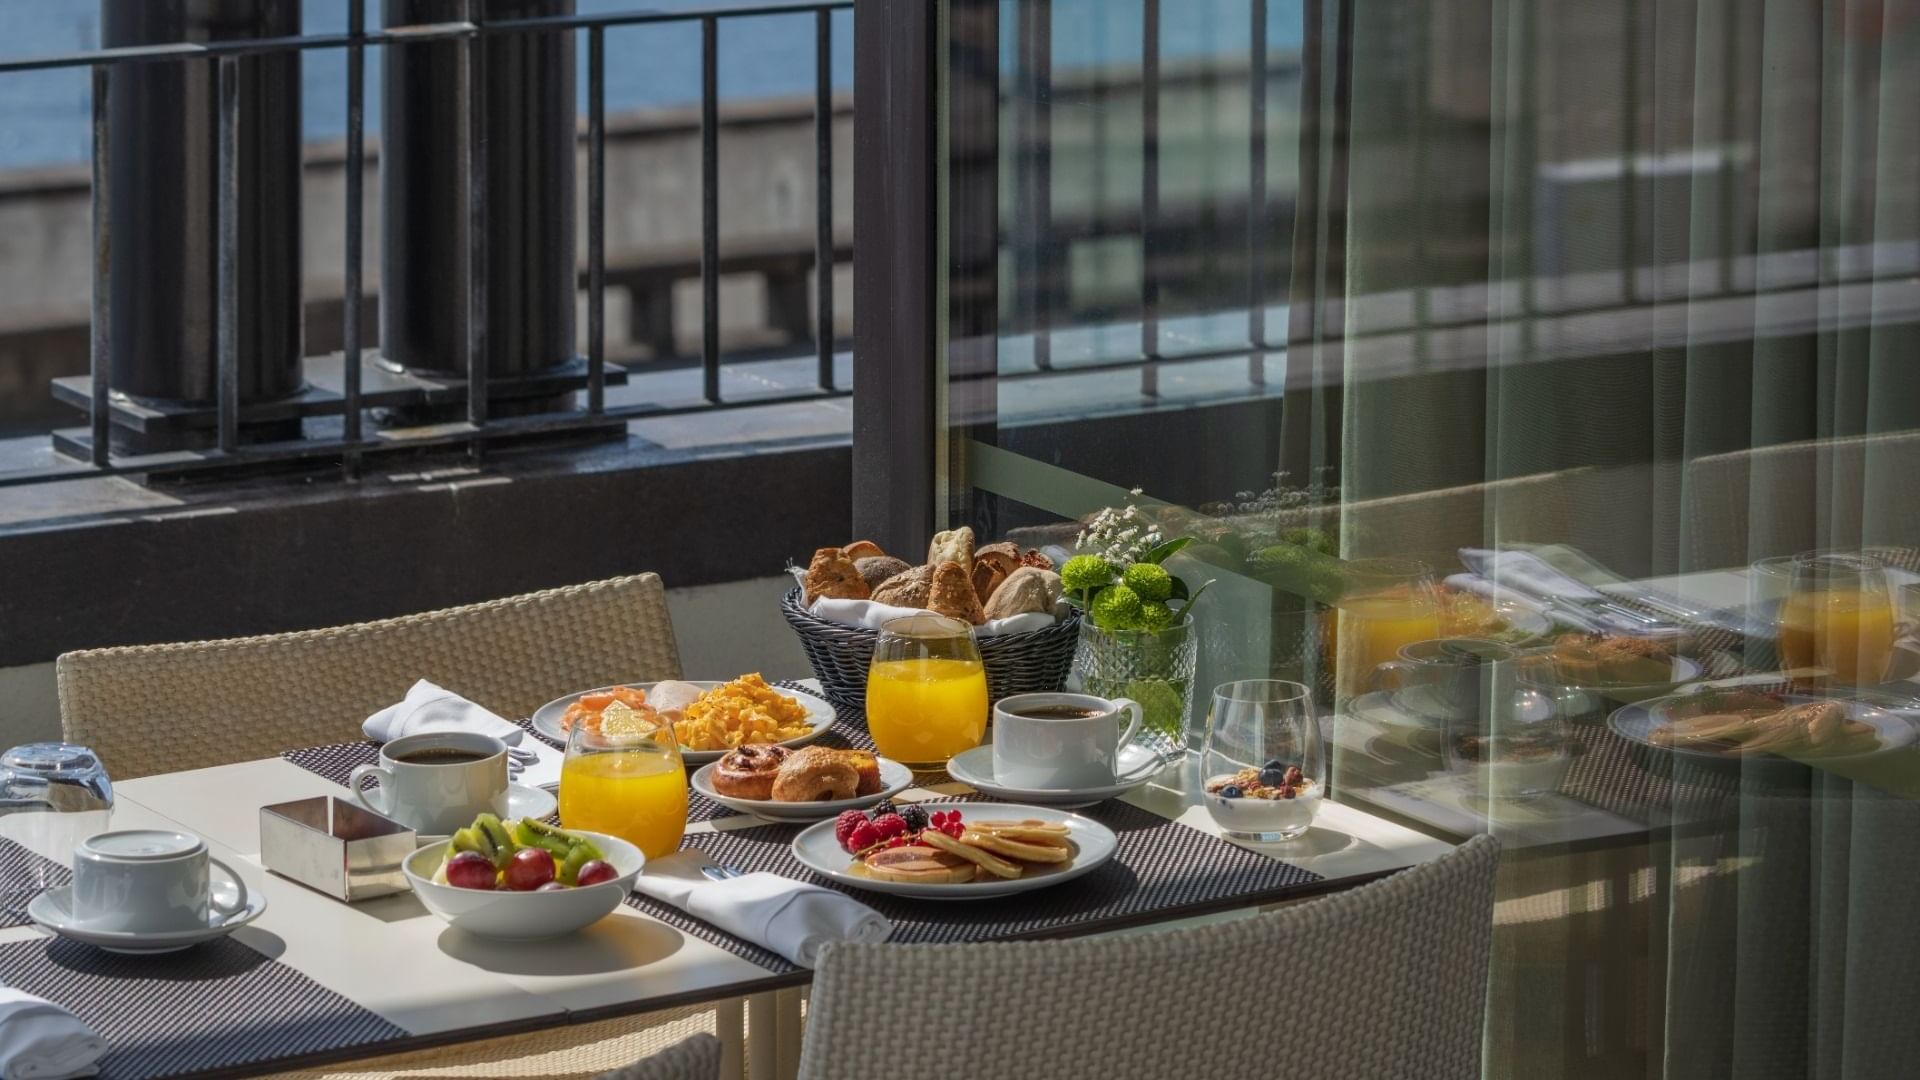 Breakfast served in Balcony Restaurant at Bensaude Hotels